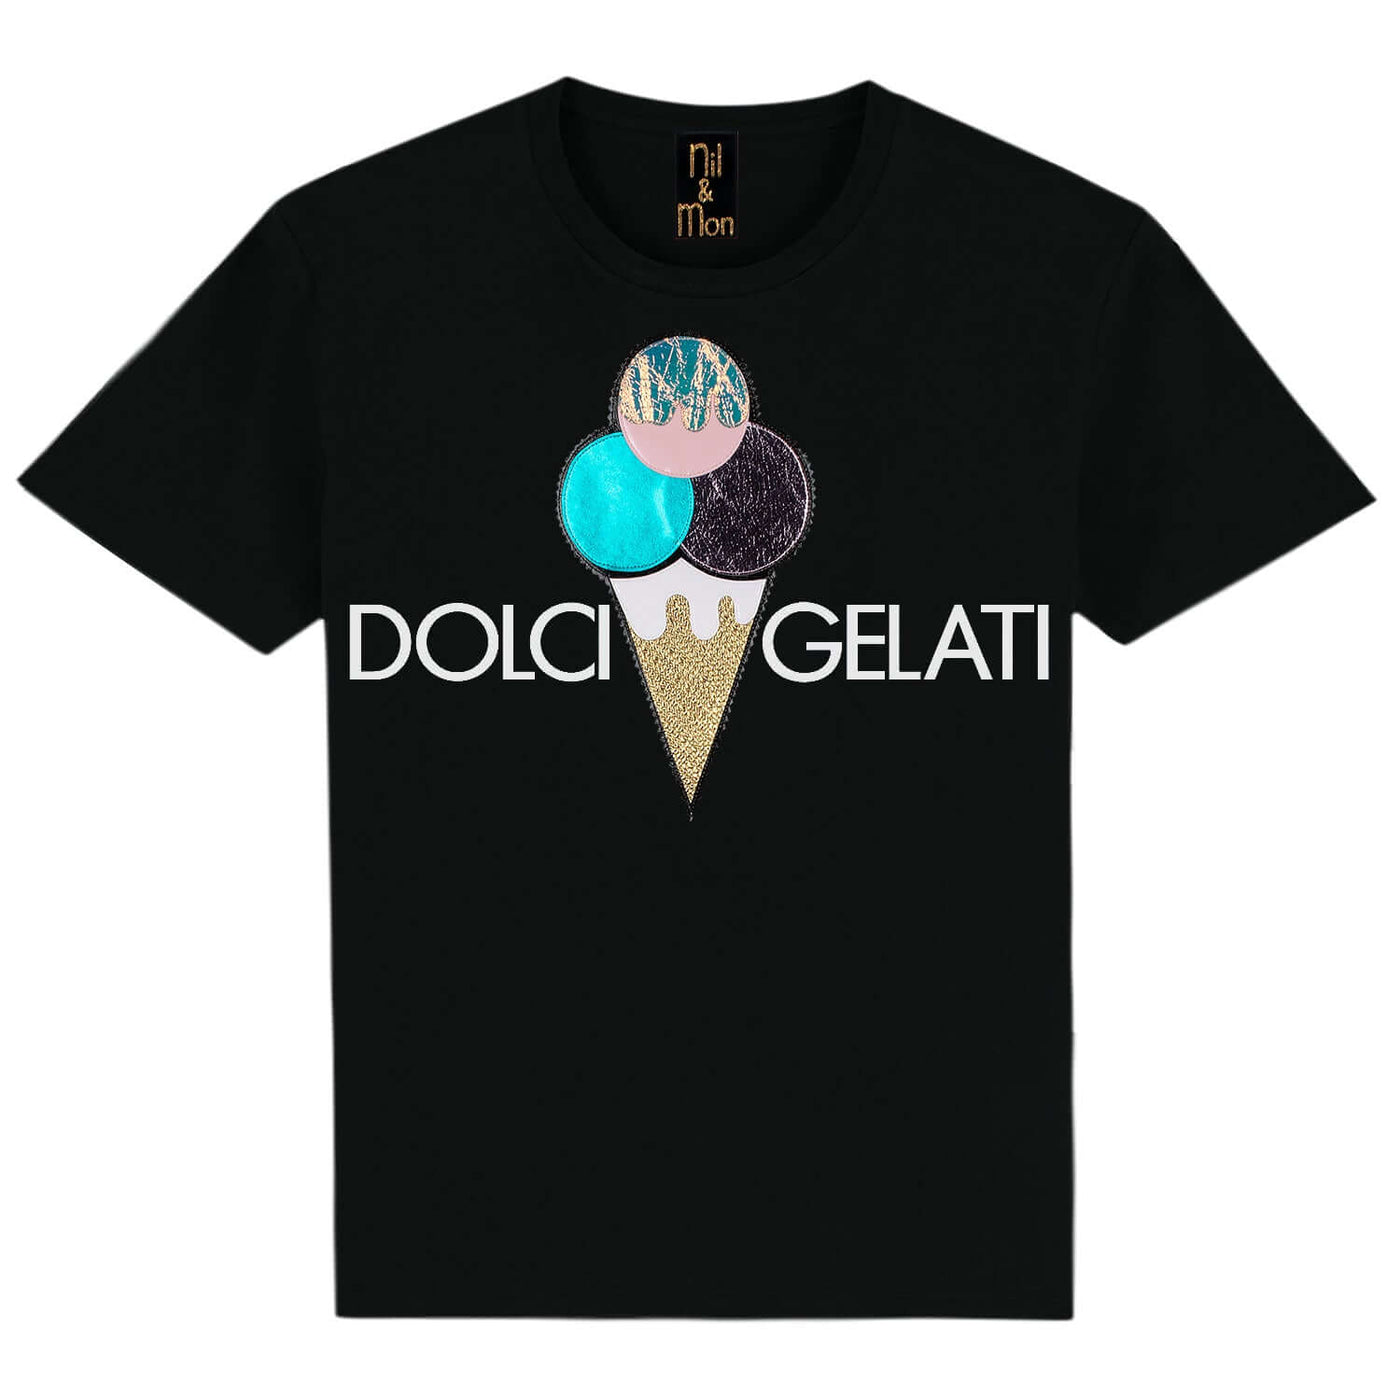 T-Shirt "Dolci Gelati" - black